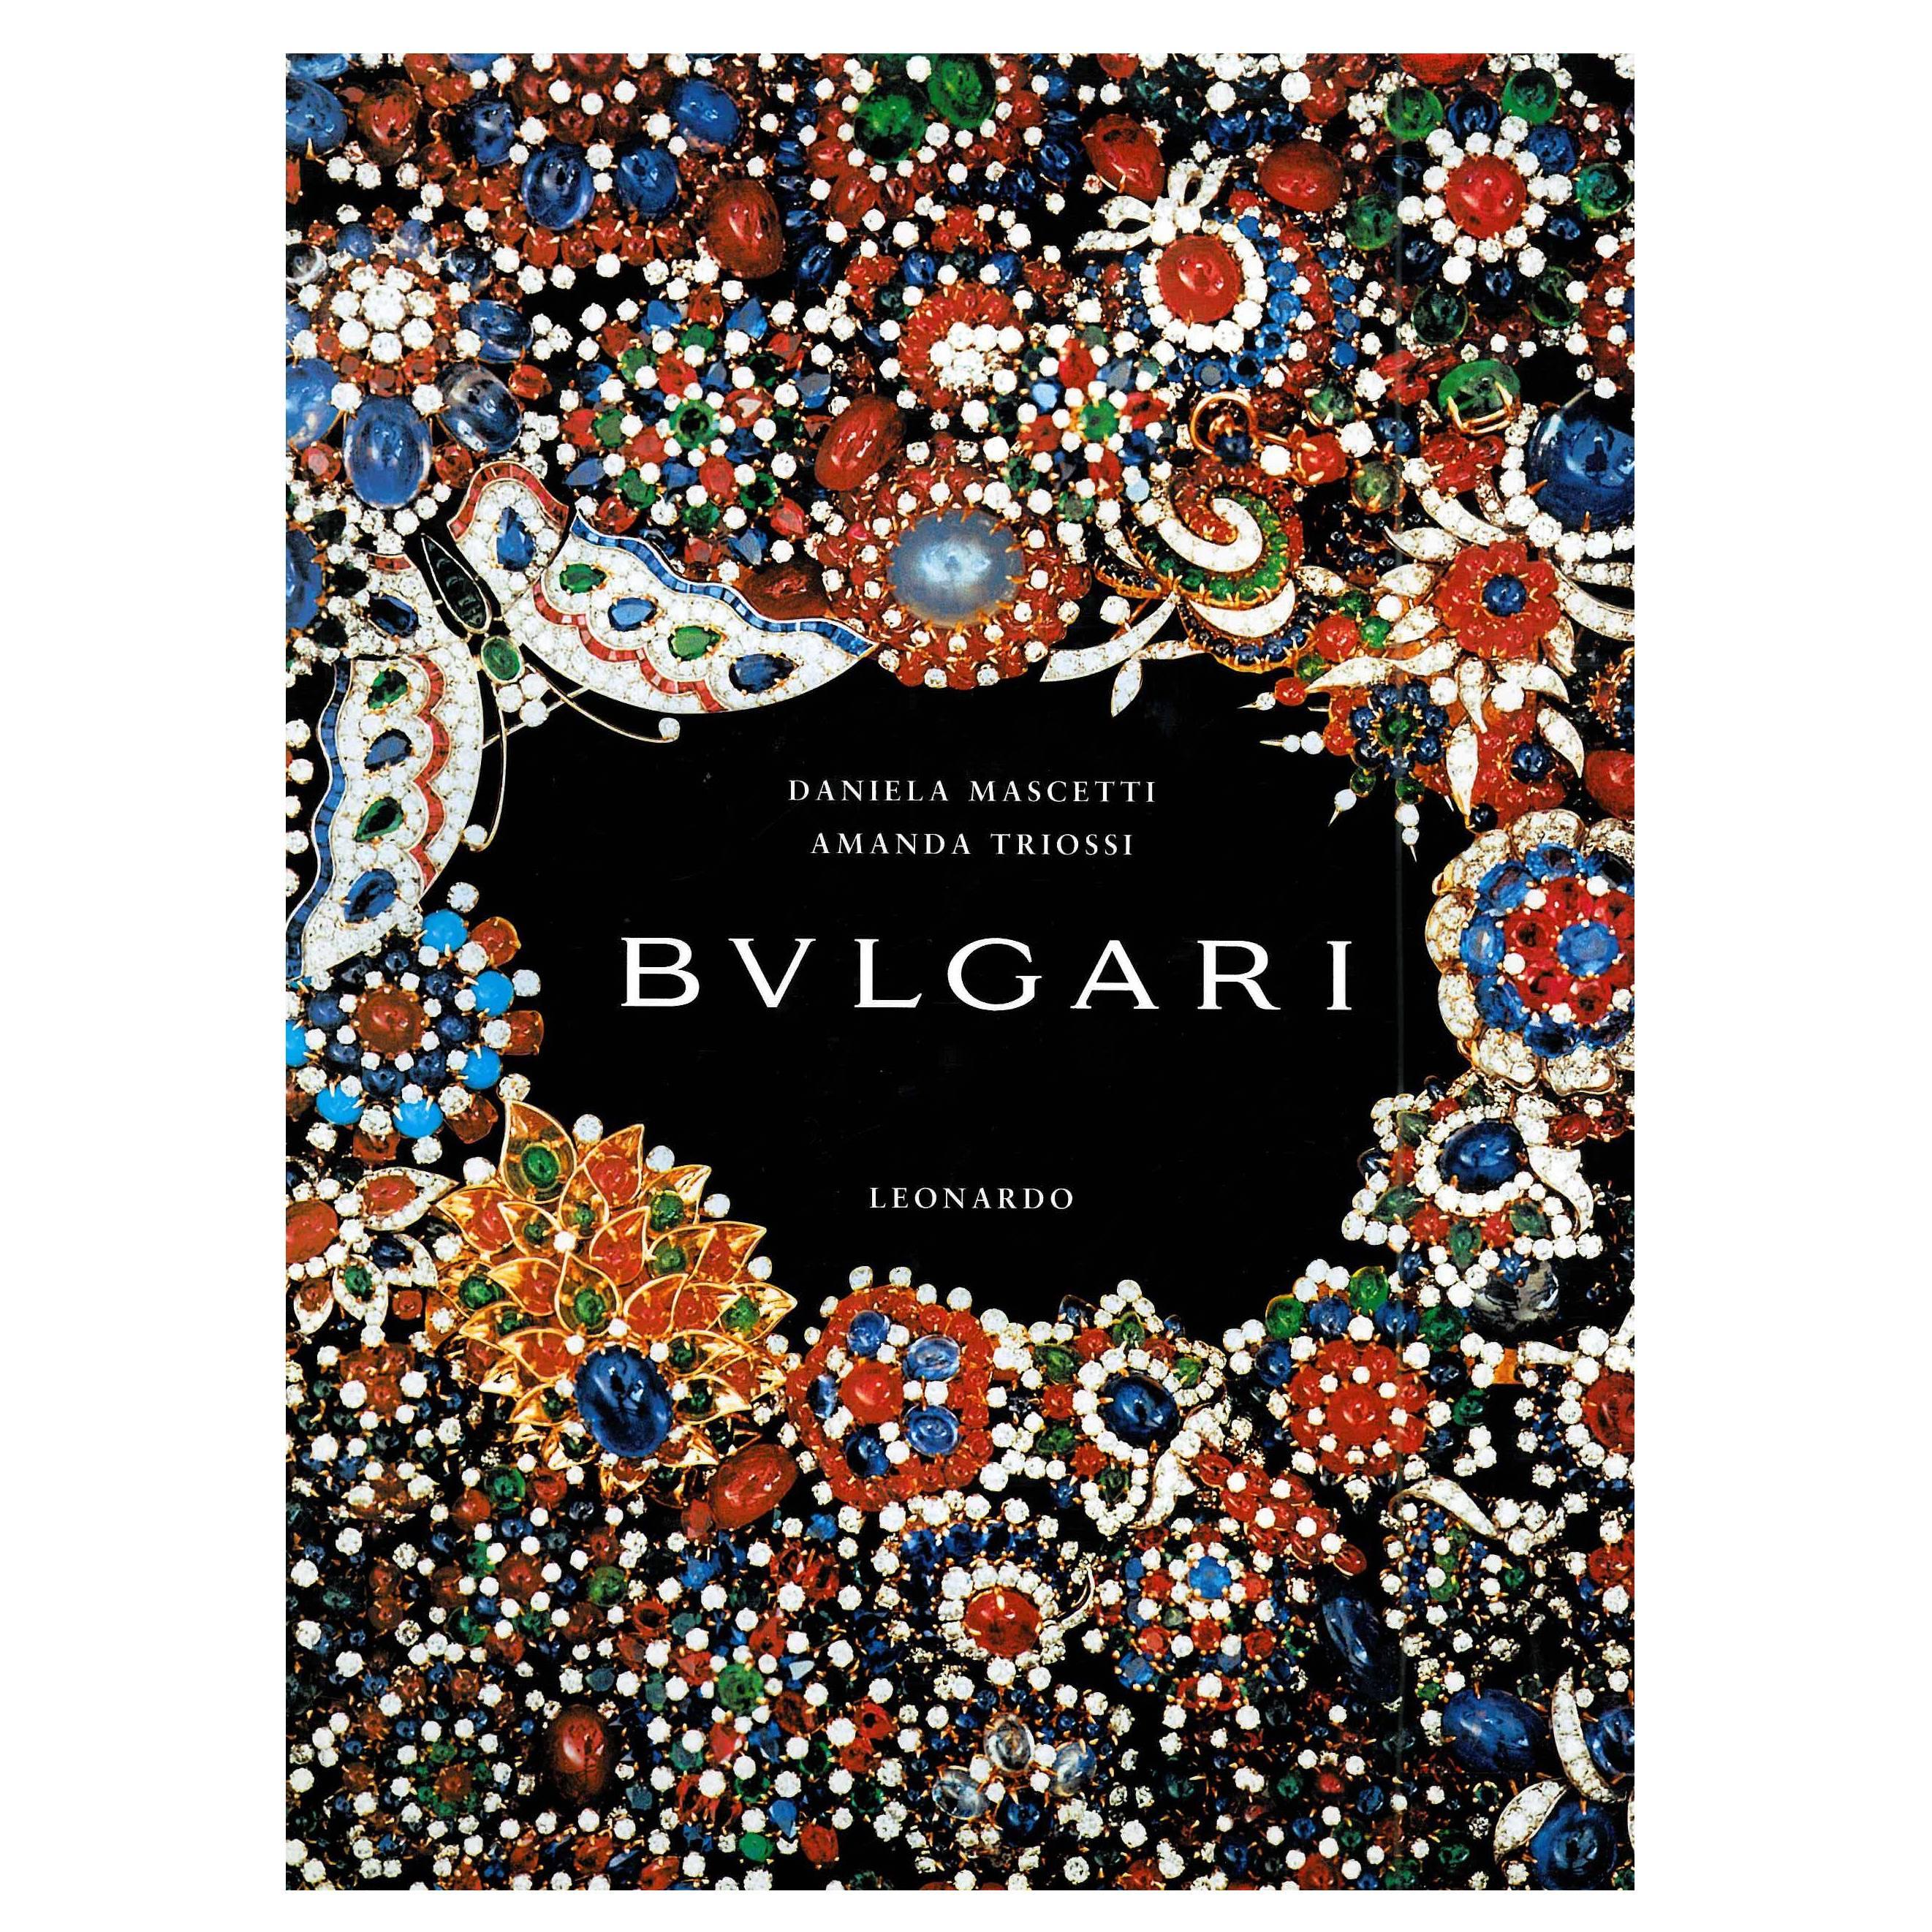 Bulgari (Livre)